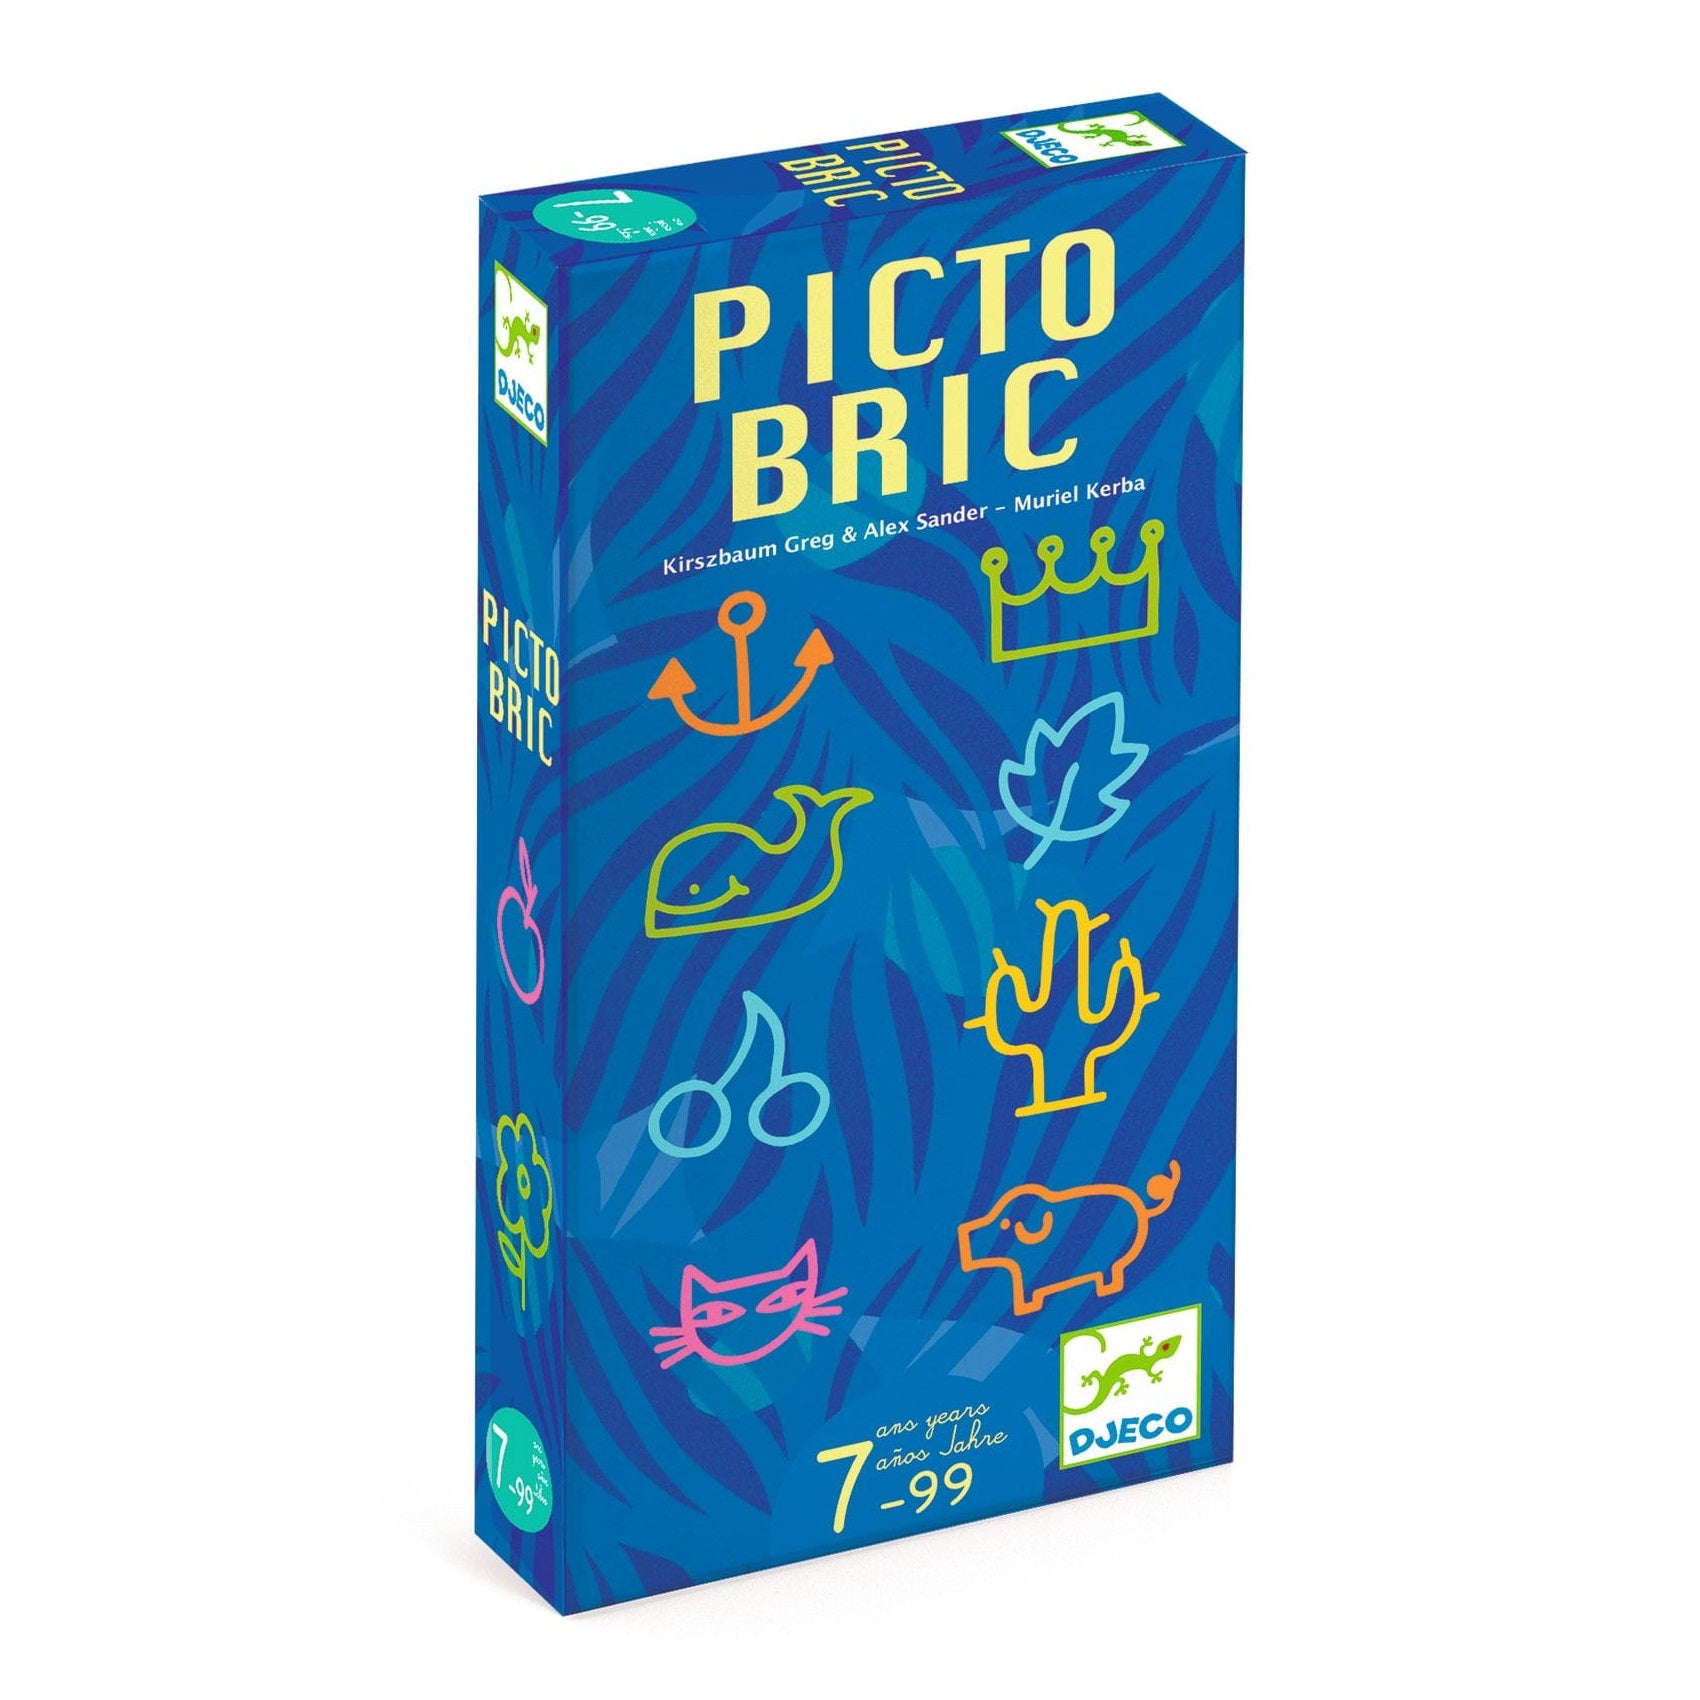 DJECO: Picto Bric Arcade Game